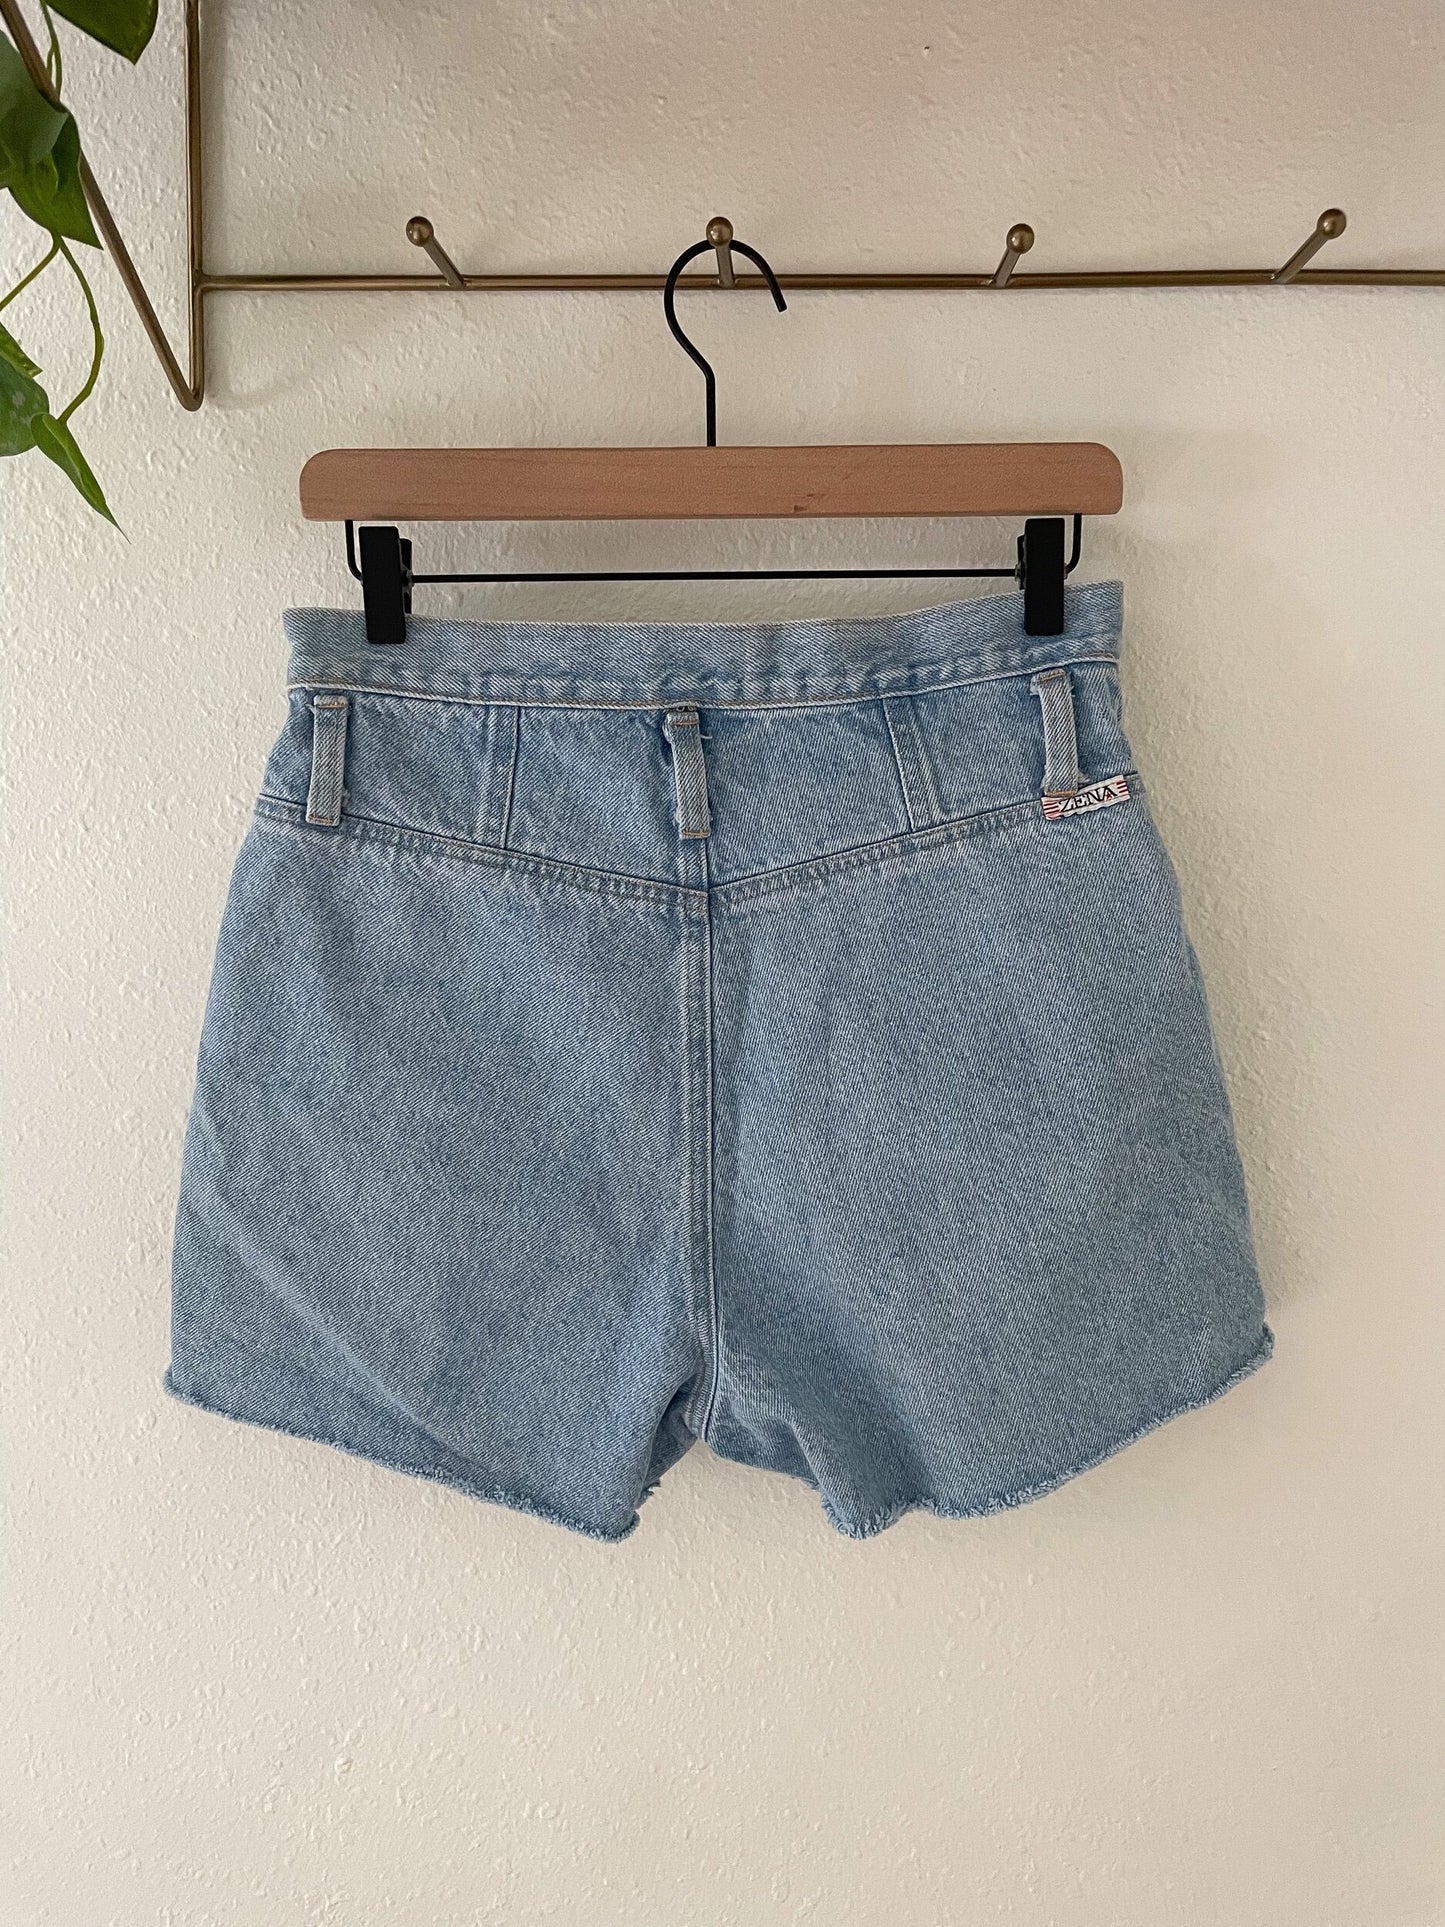 90s denim Zena shorts